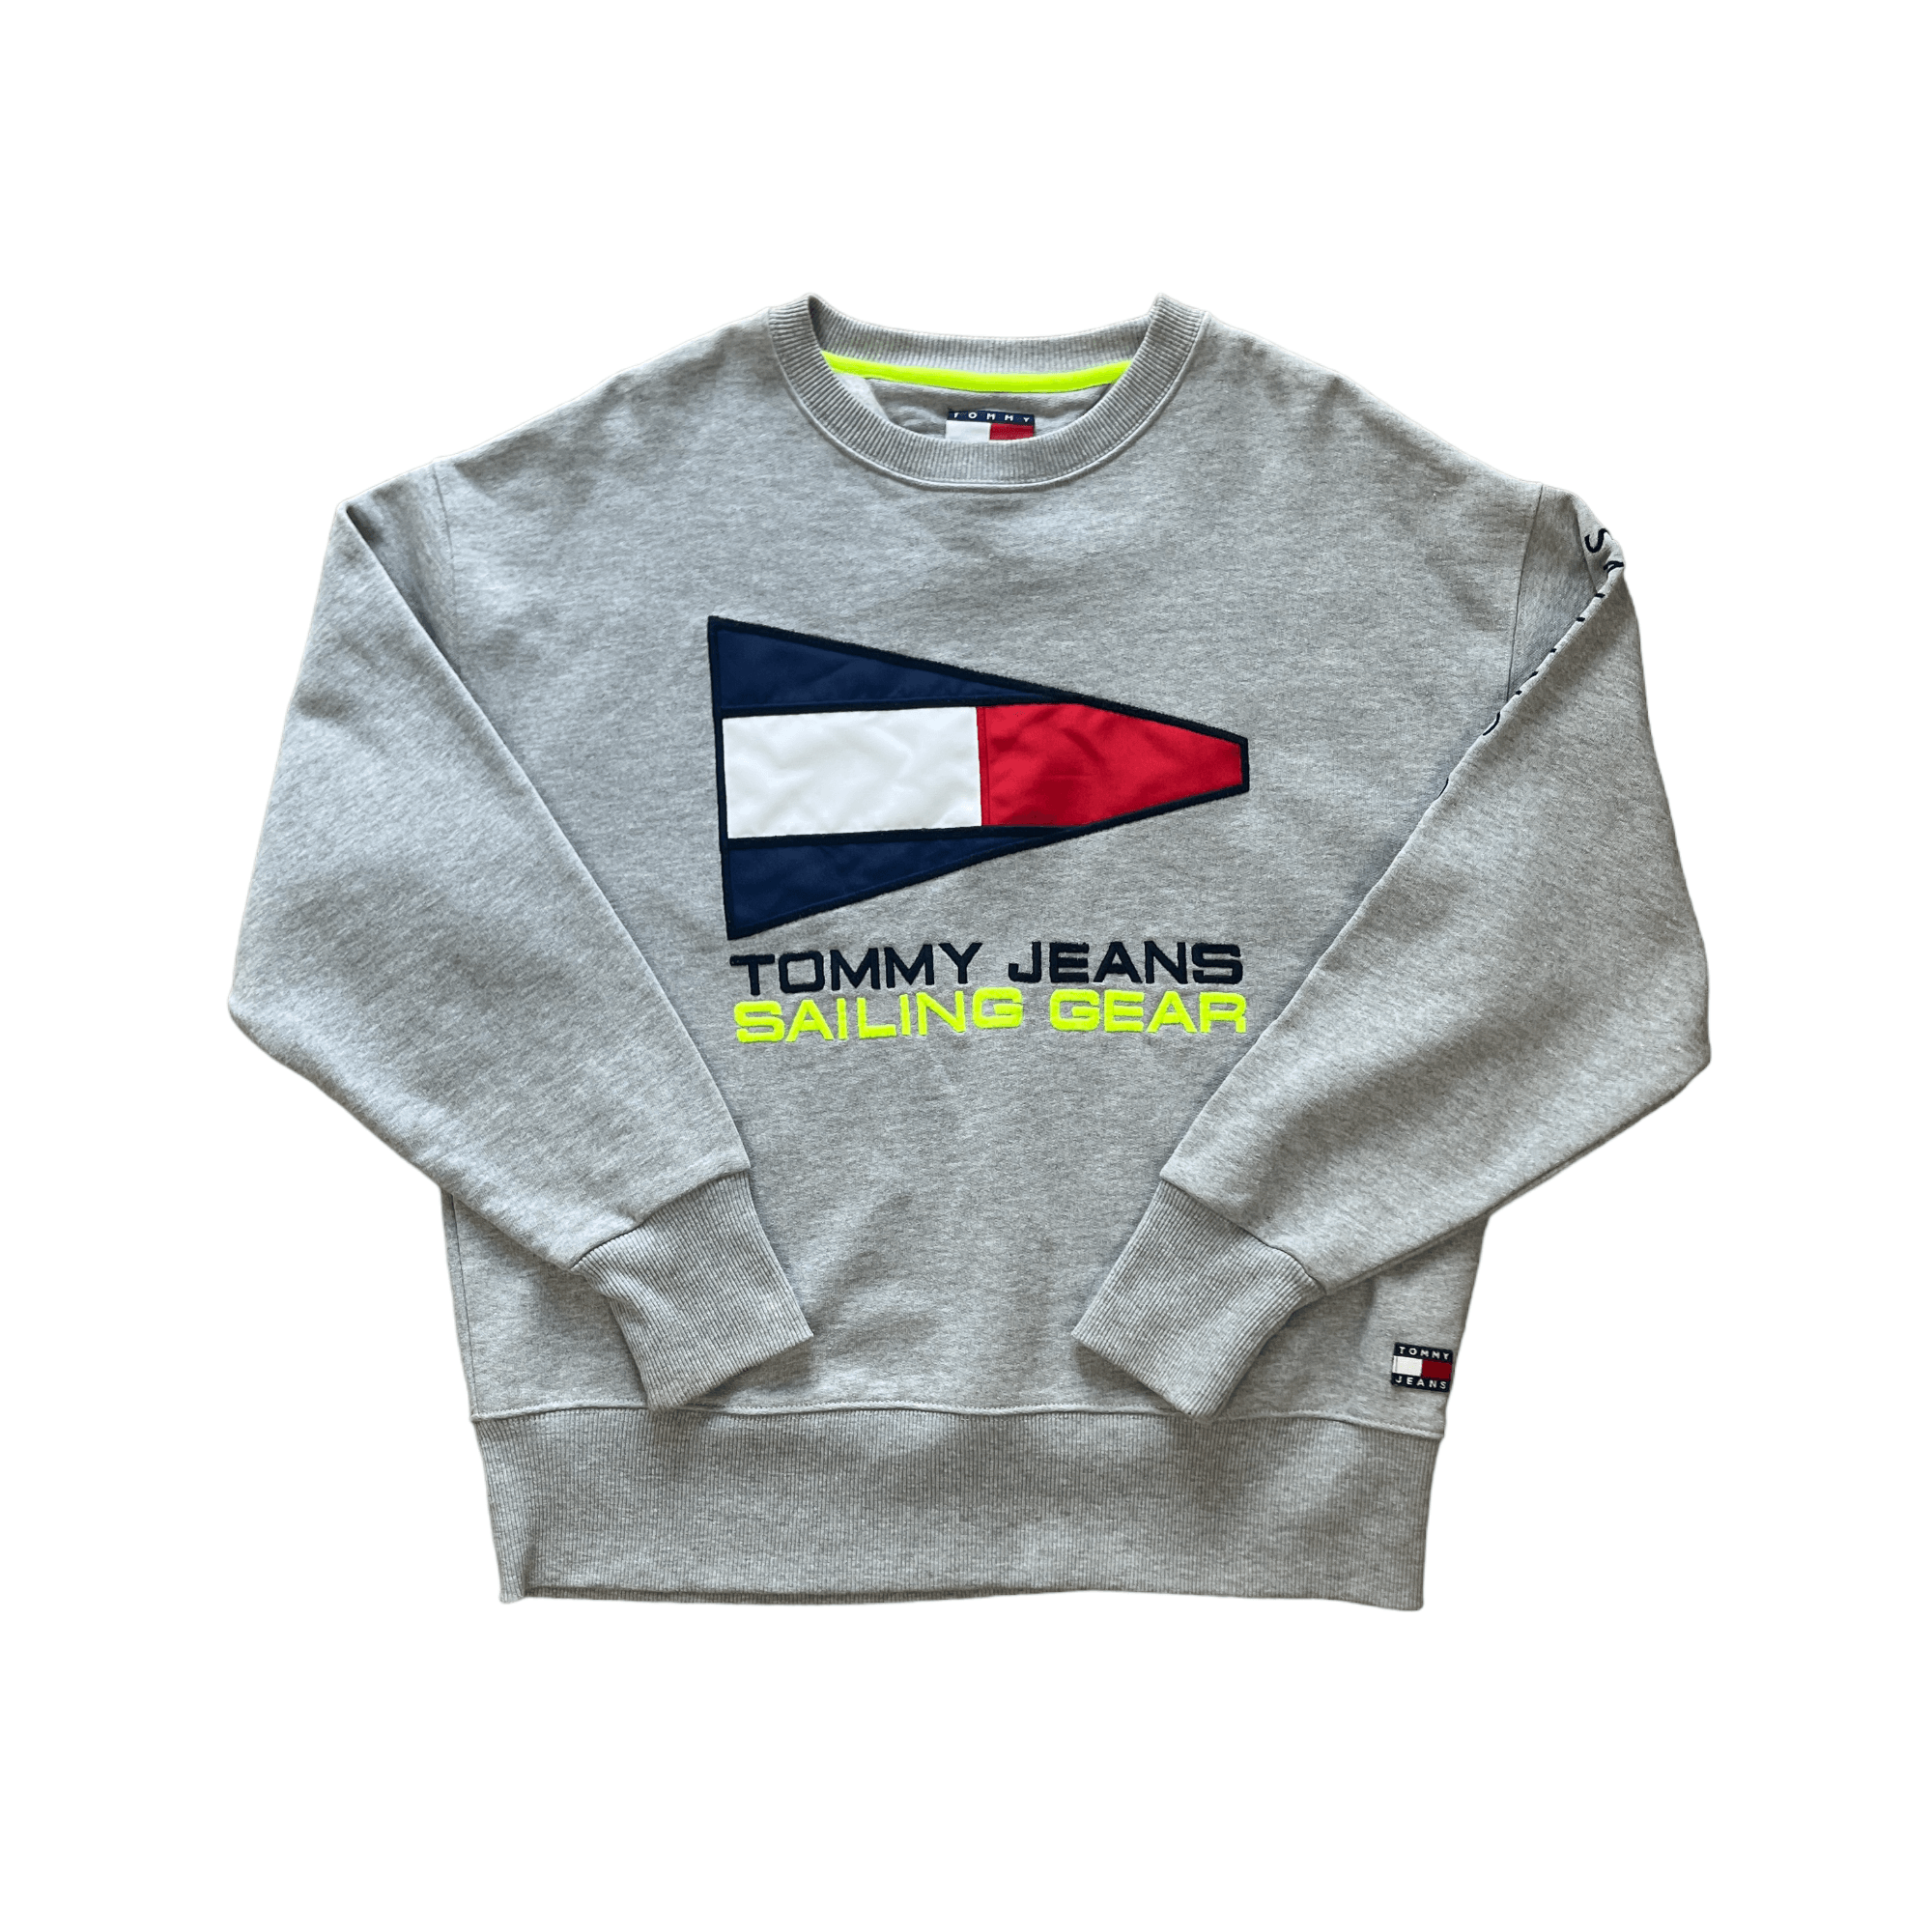 Vintage Grey Tommy Hilfiger Sailing Gear Sweatshirt - Large - The Streetwear Studio